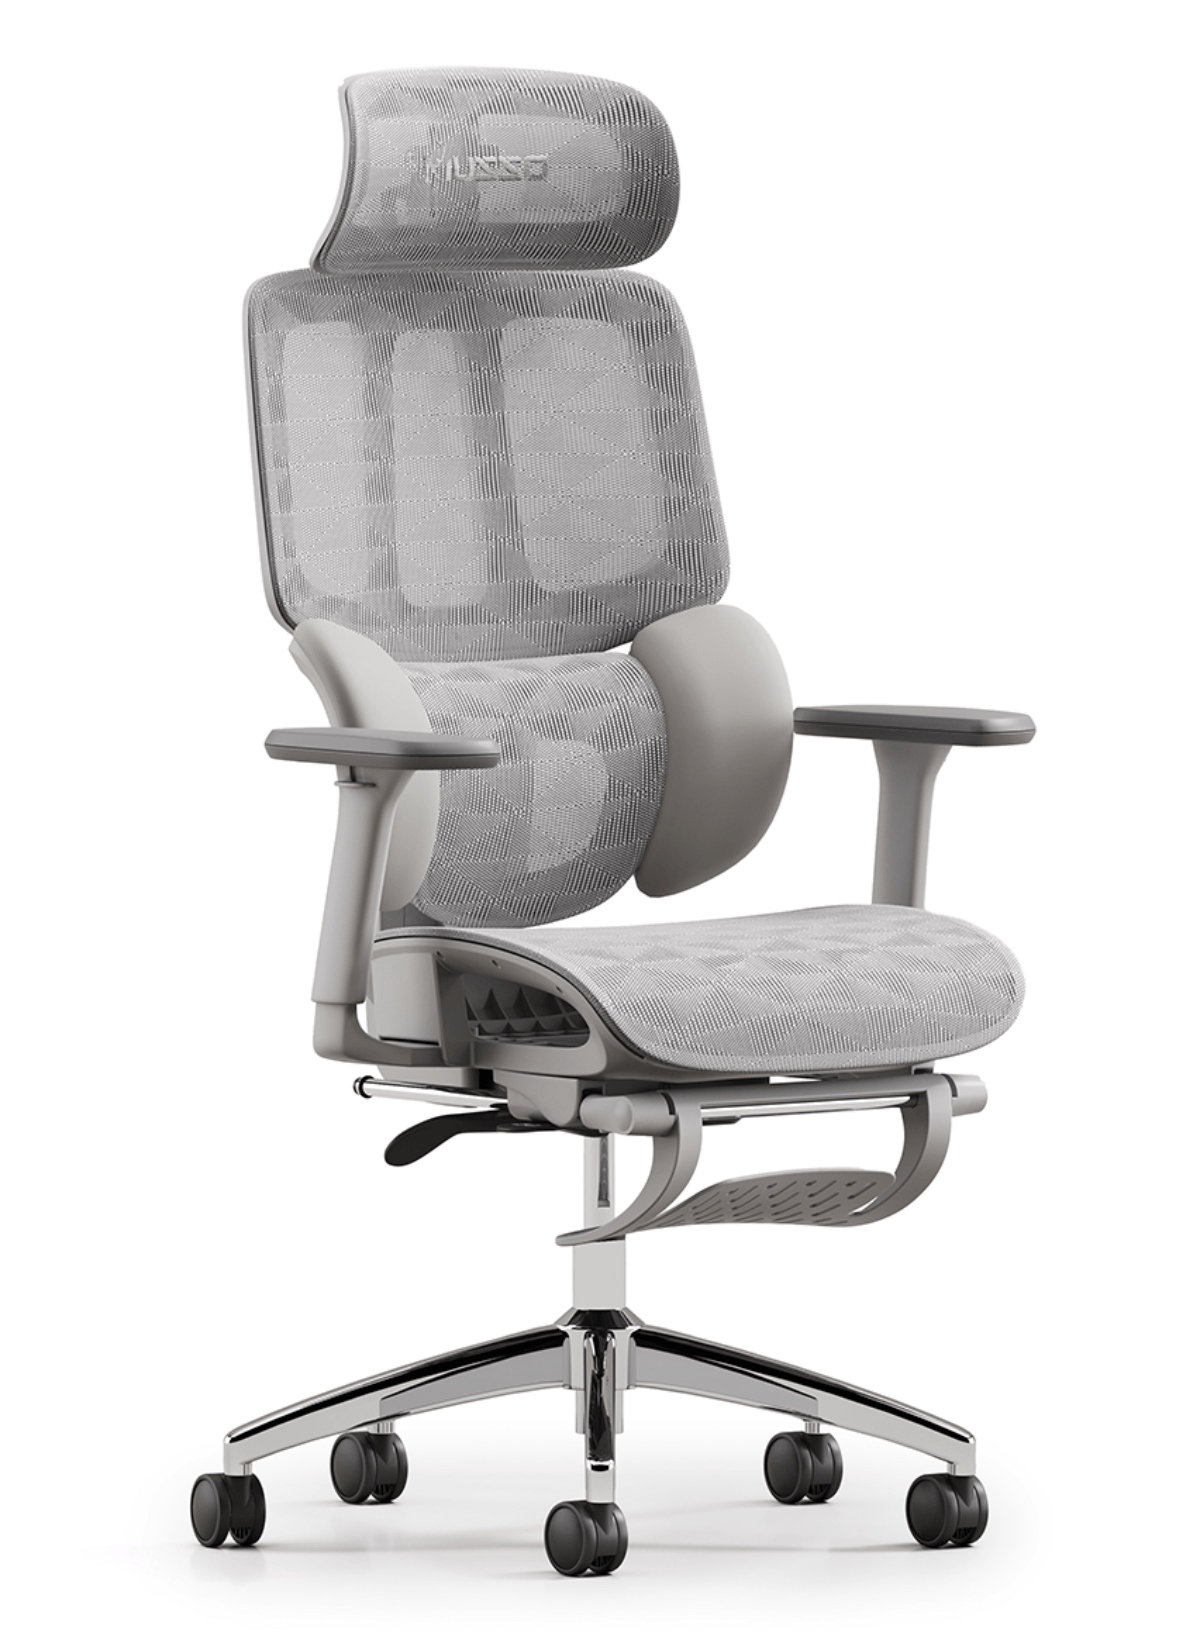 MUSSO H80 Classic Ergo Chairs  Adjustable Headrest Ergonomic Mesh Office Chair  XL SIZE